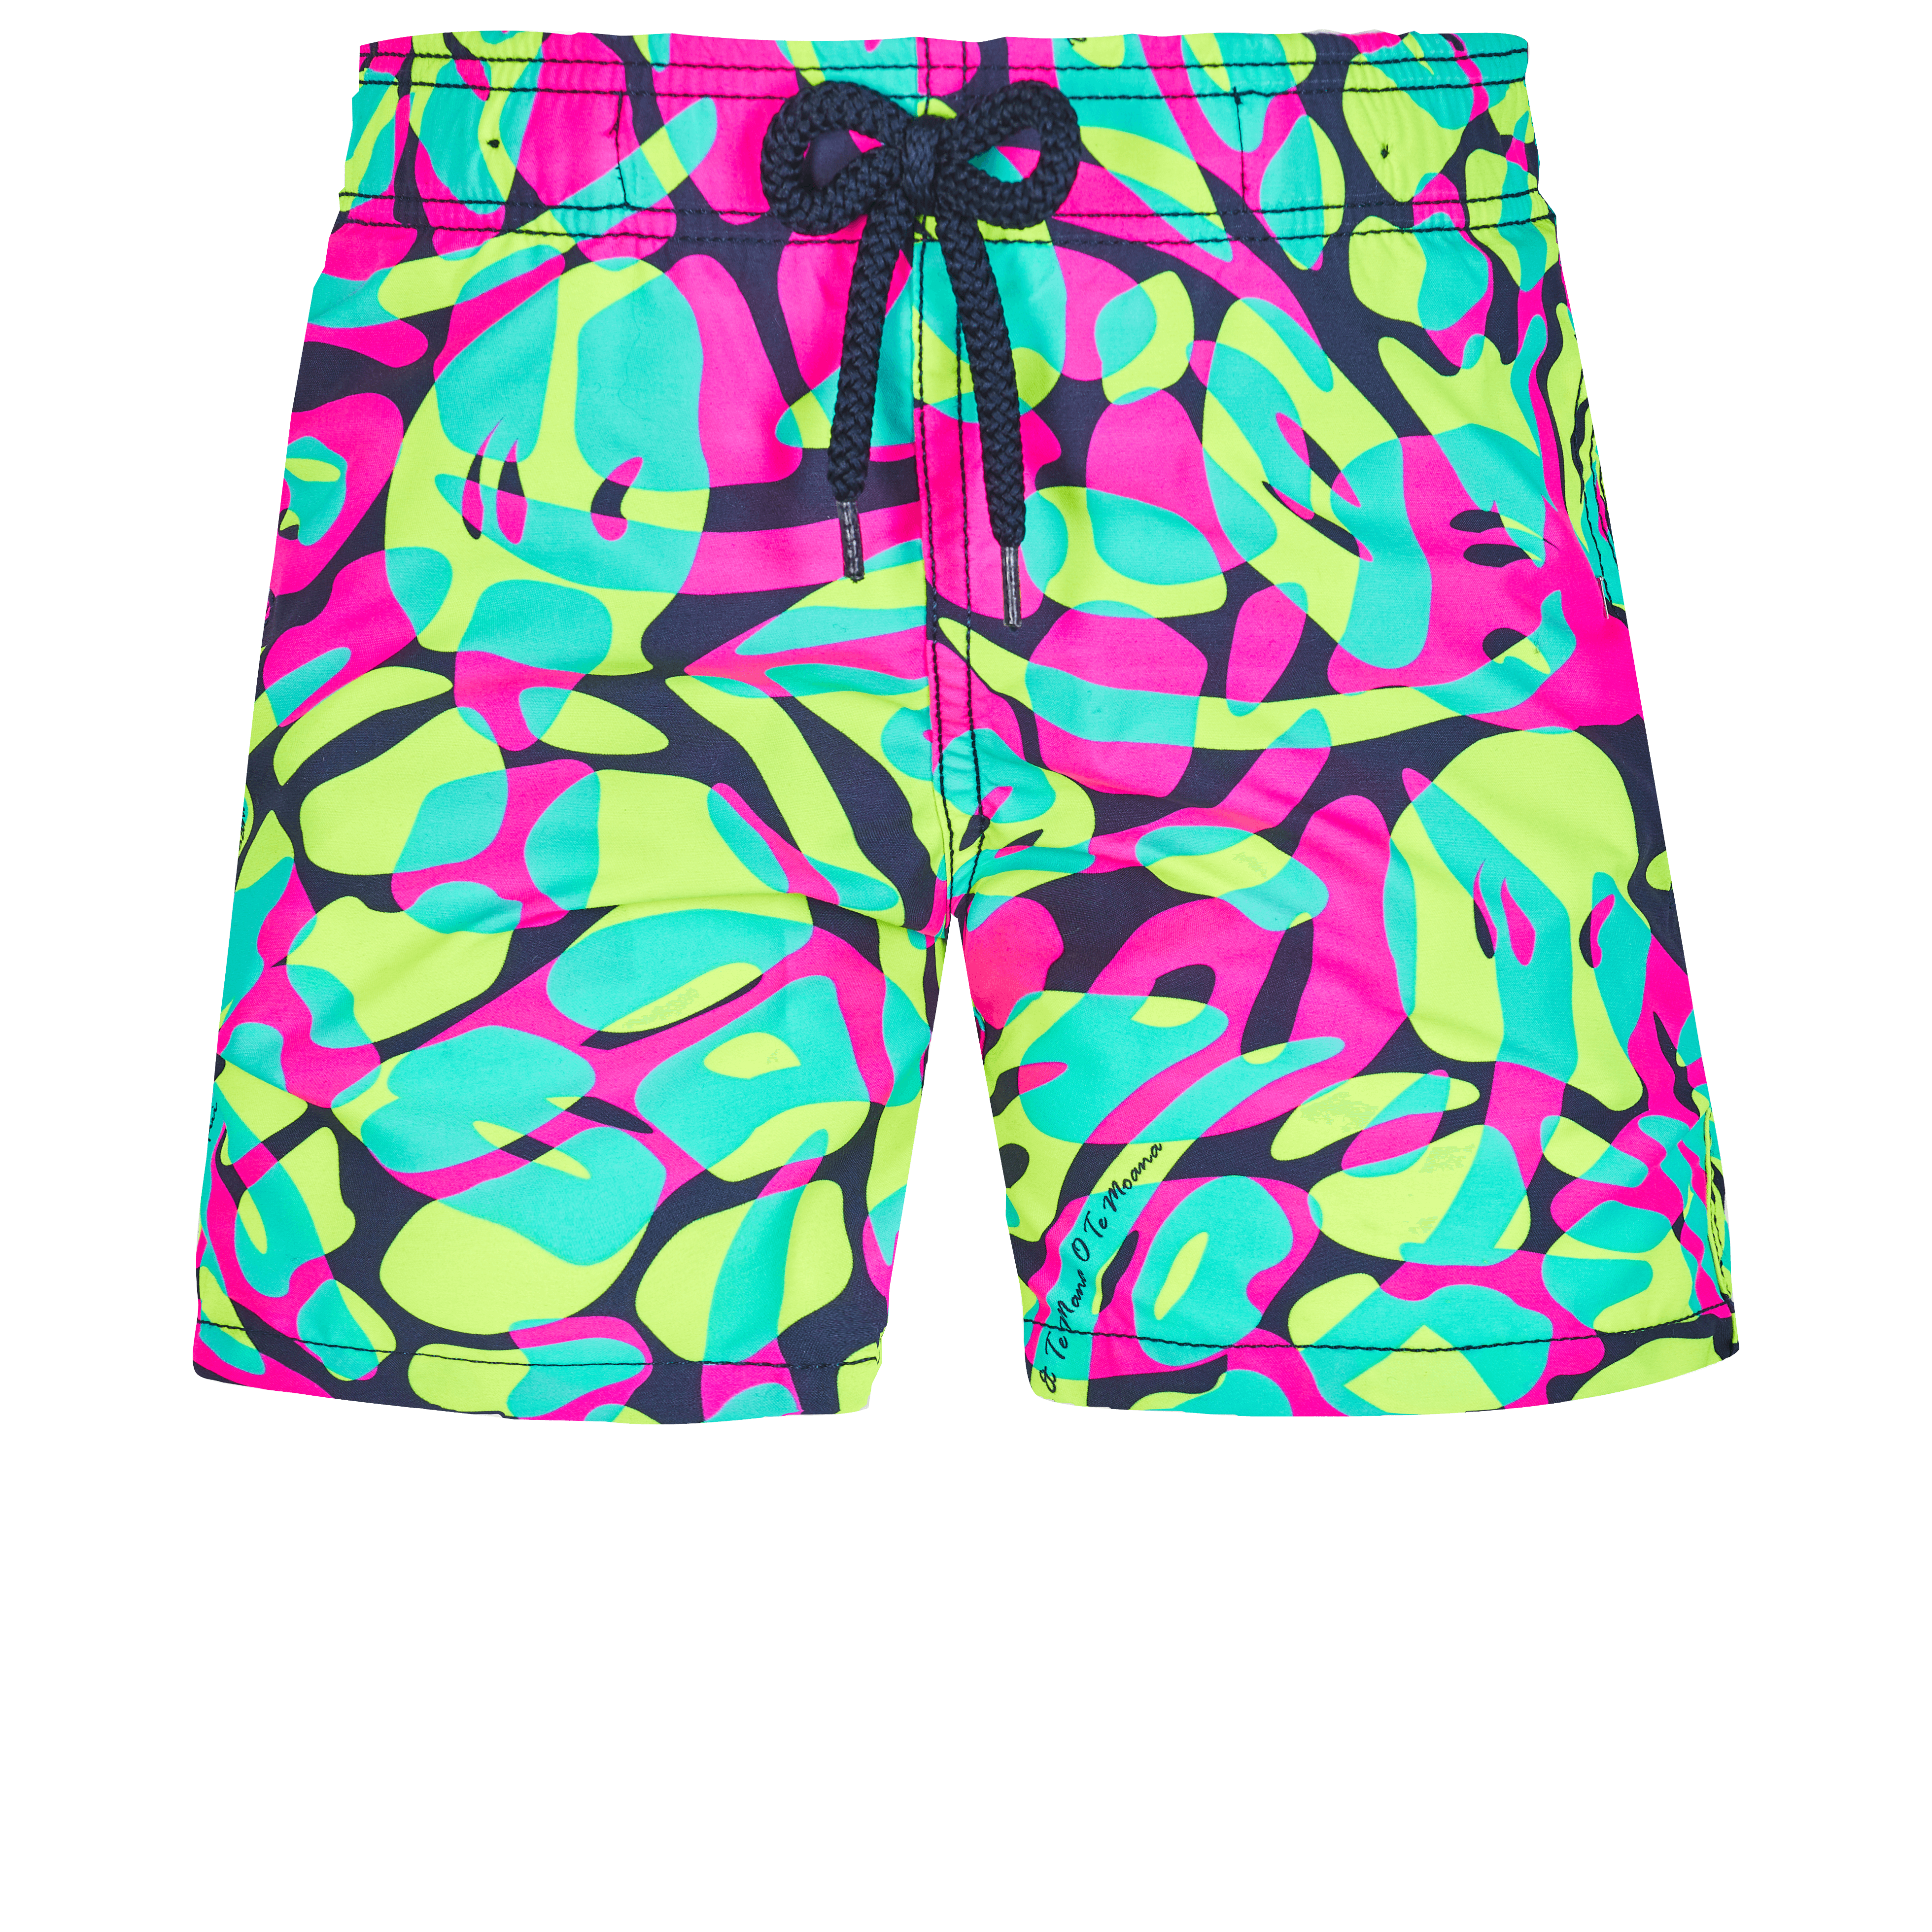 Tribal Sea Turtles Men Summer Casual Shorts,Beach Shorts Comfortable Shorts